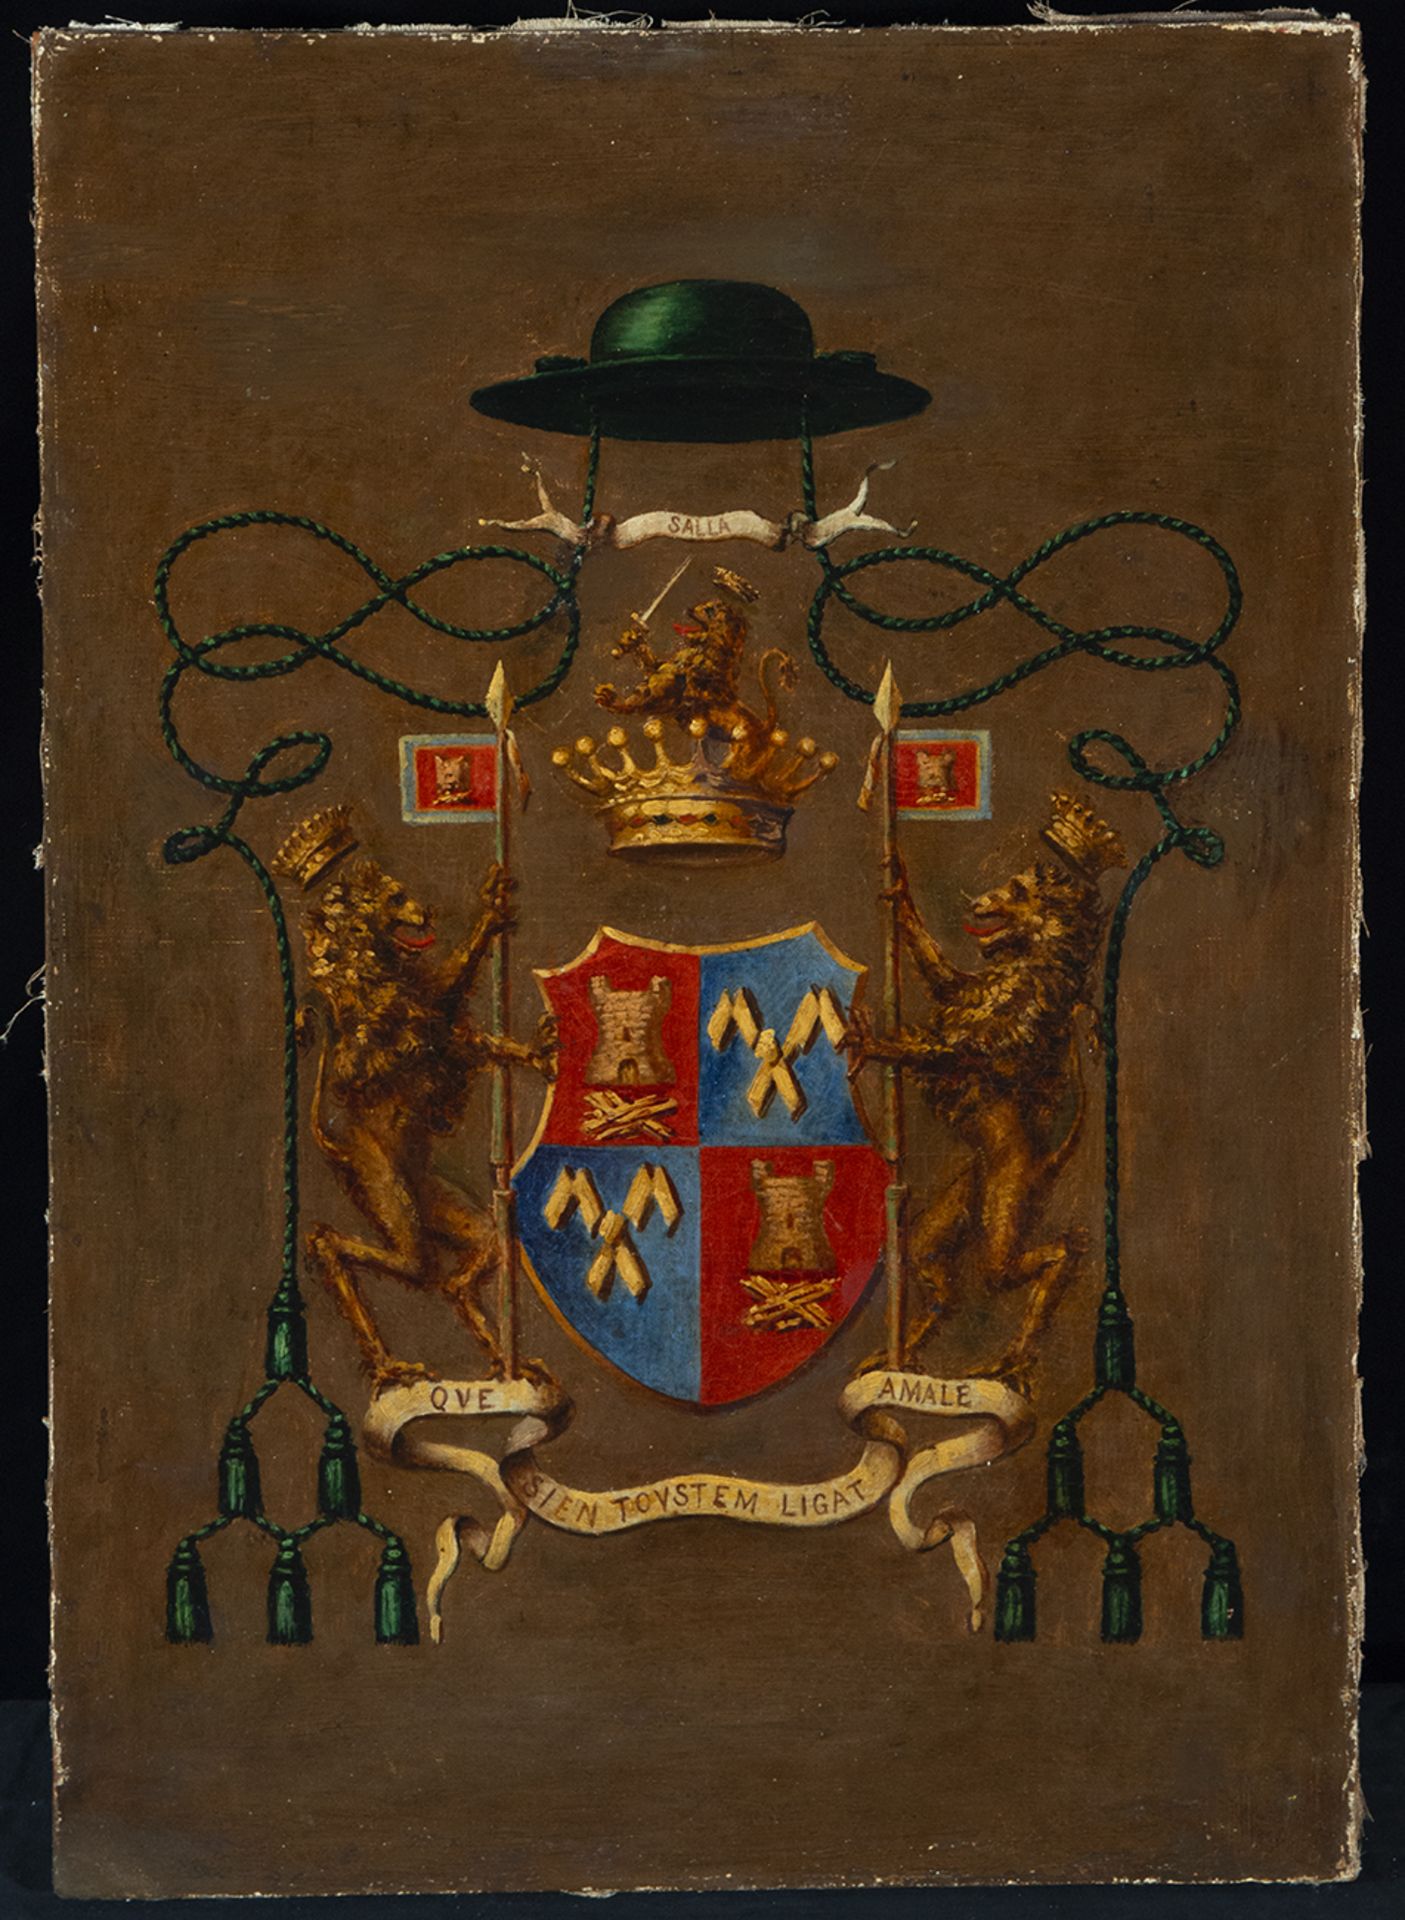 Archbishop's coat of arms on canvas, 19th century European school